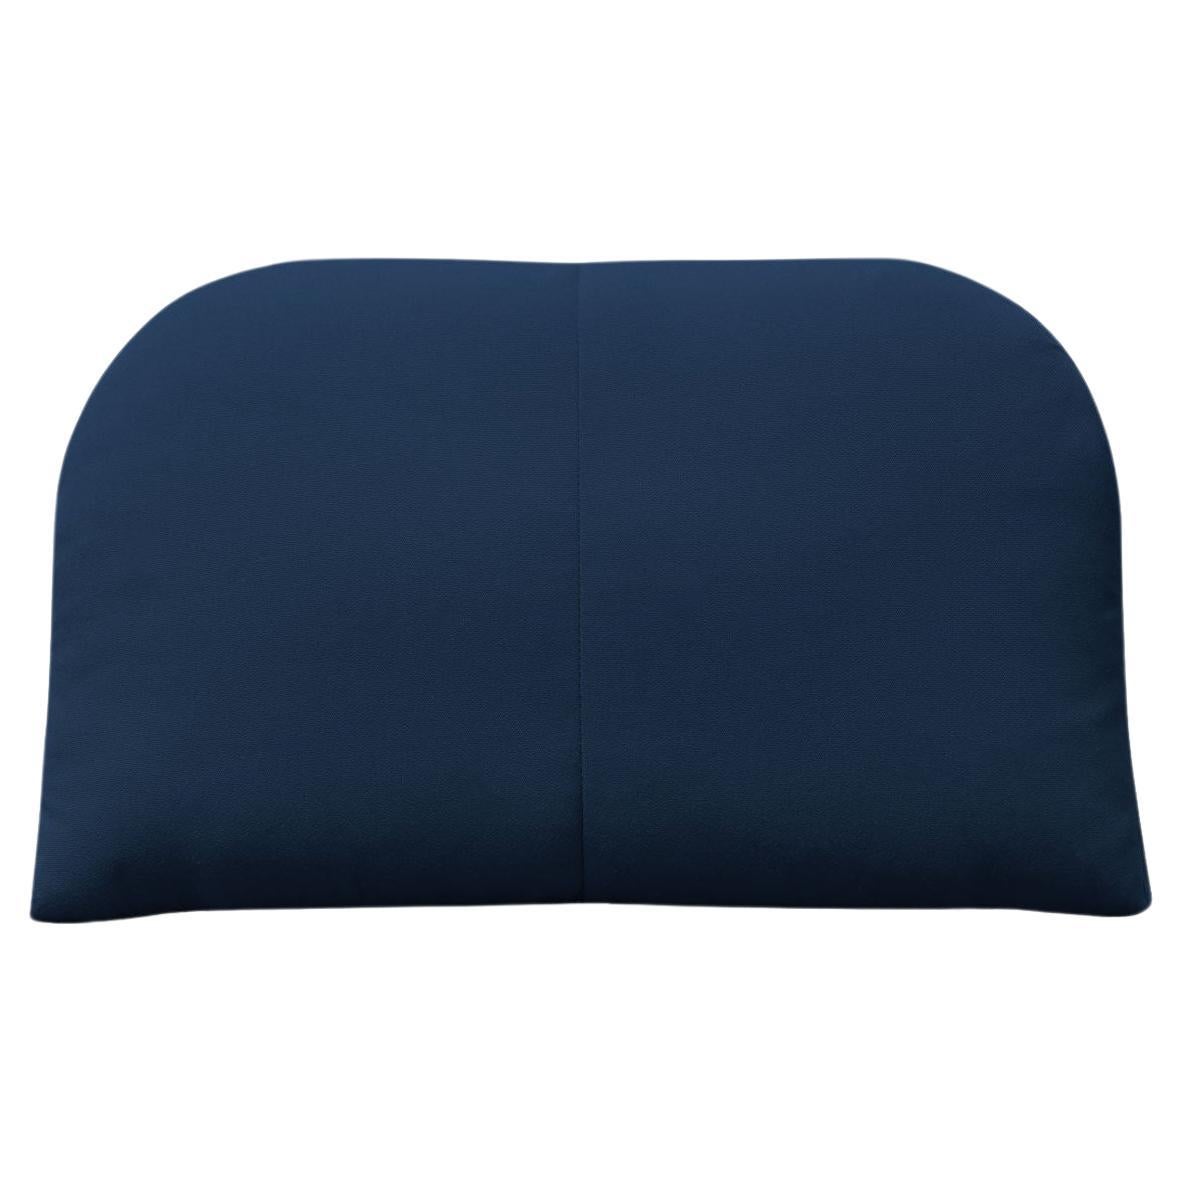 Bend Goods - Arc Throw Pillow in Navy Blue Sunbrella en vente